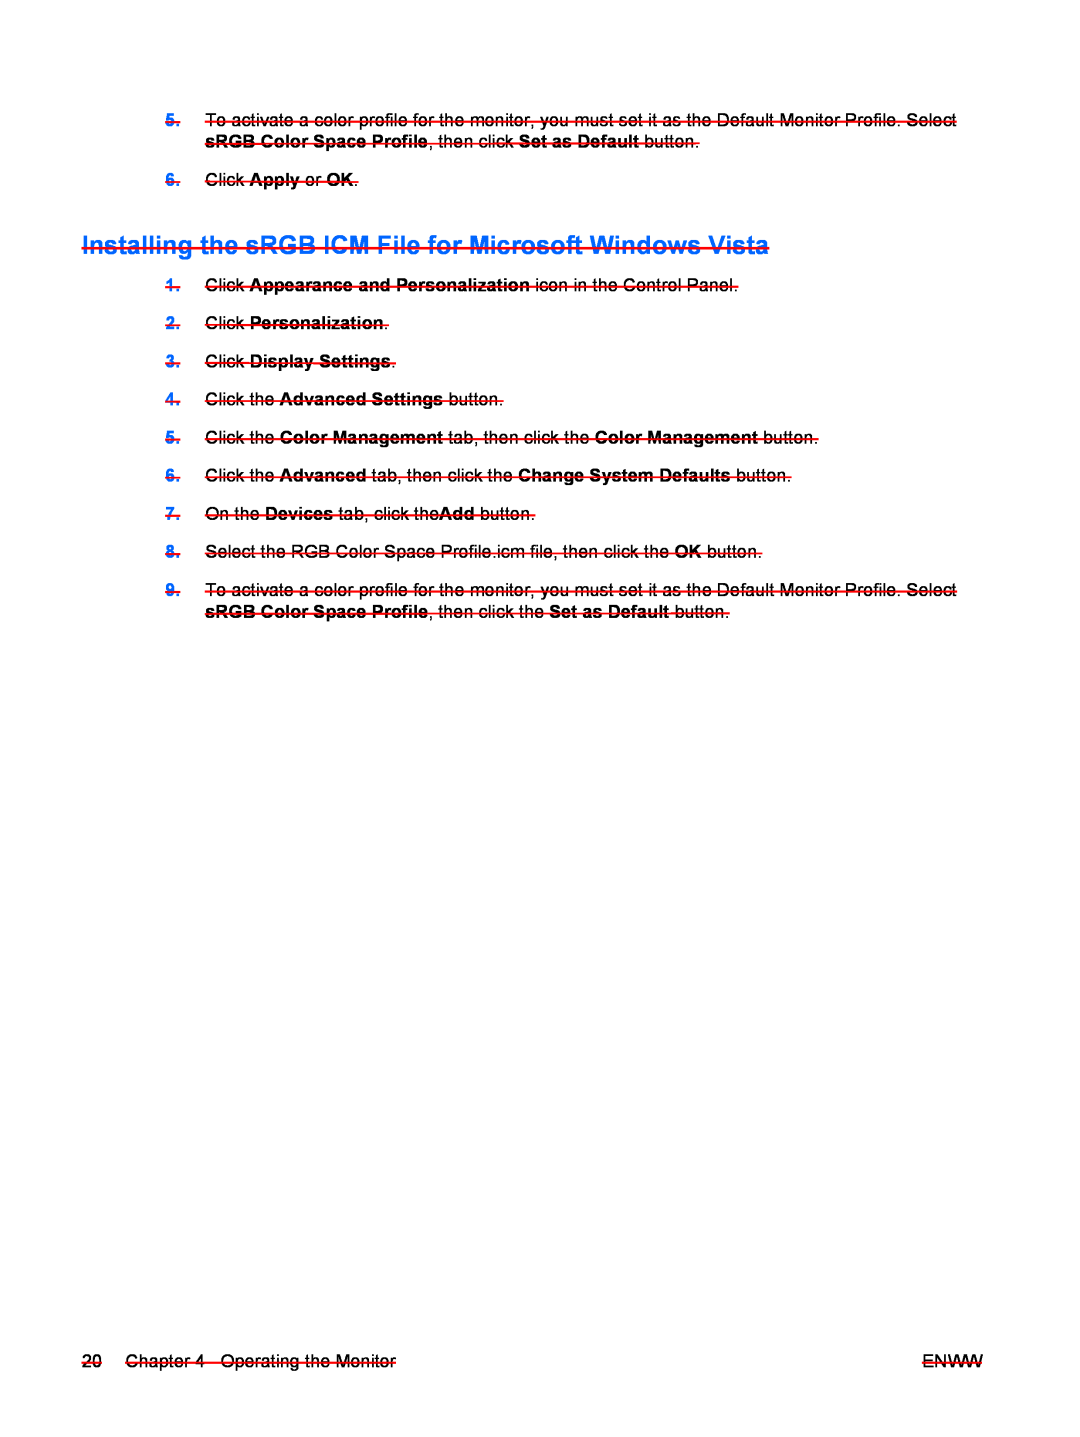 HP CQ1859 manual Installing the sRGB ICM File for Microsoft Windows Vista, Click Personalization 3. Click Display Settings 